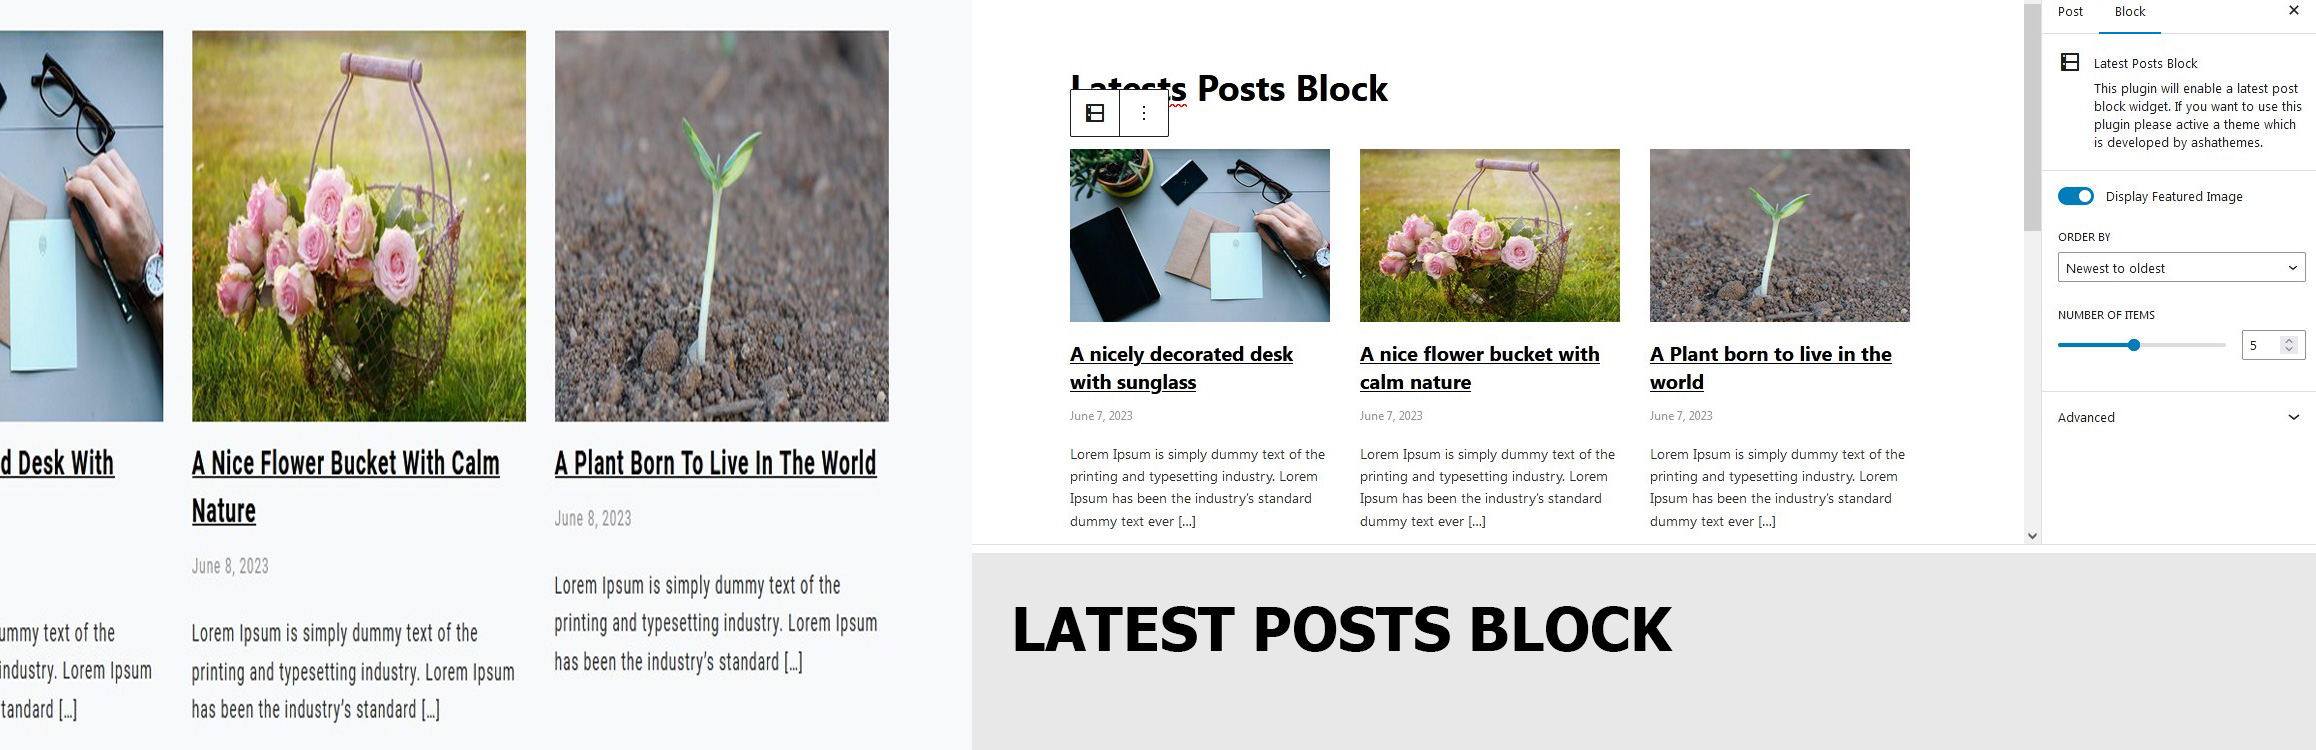 Latest Posts Block Preview Wordpress Plugin - Rating, Reviews, Demo & Download